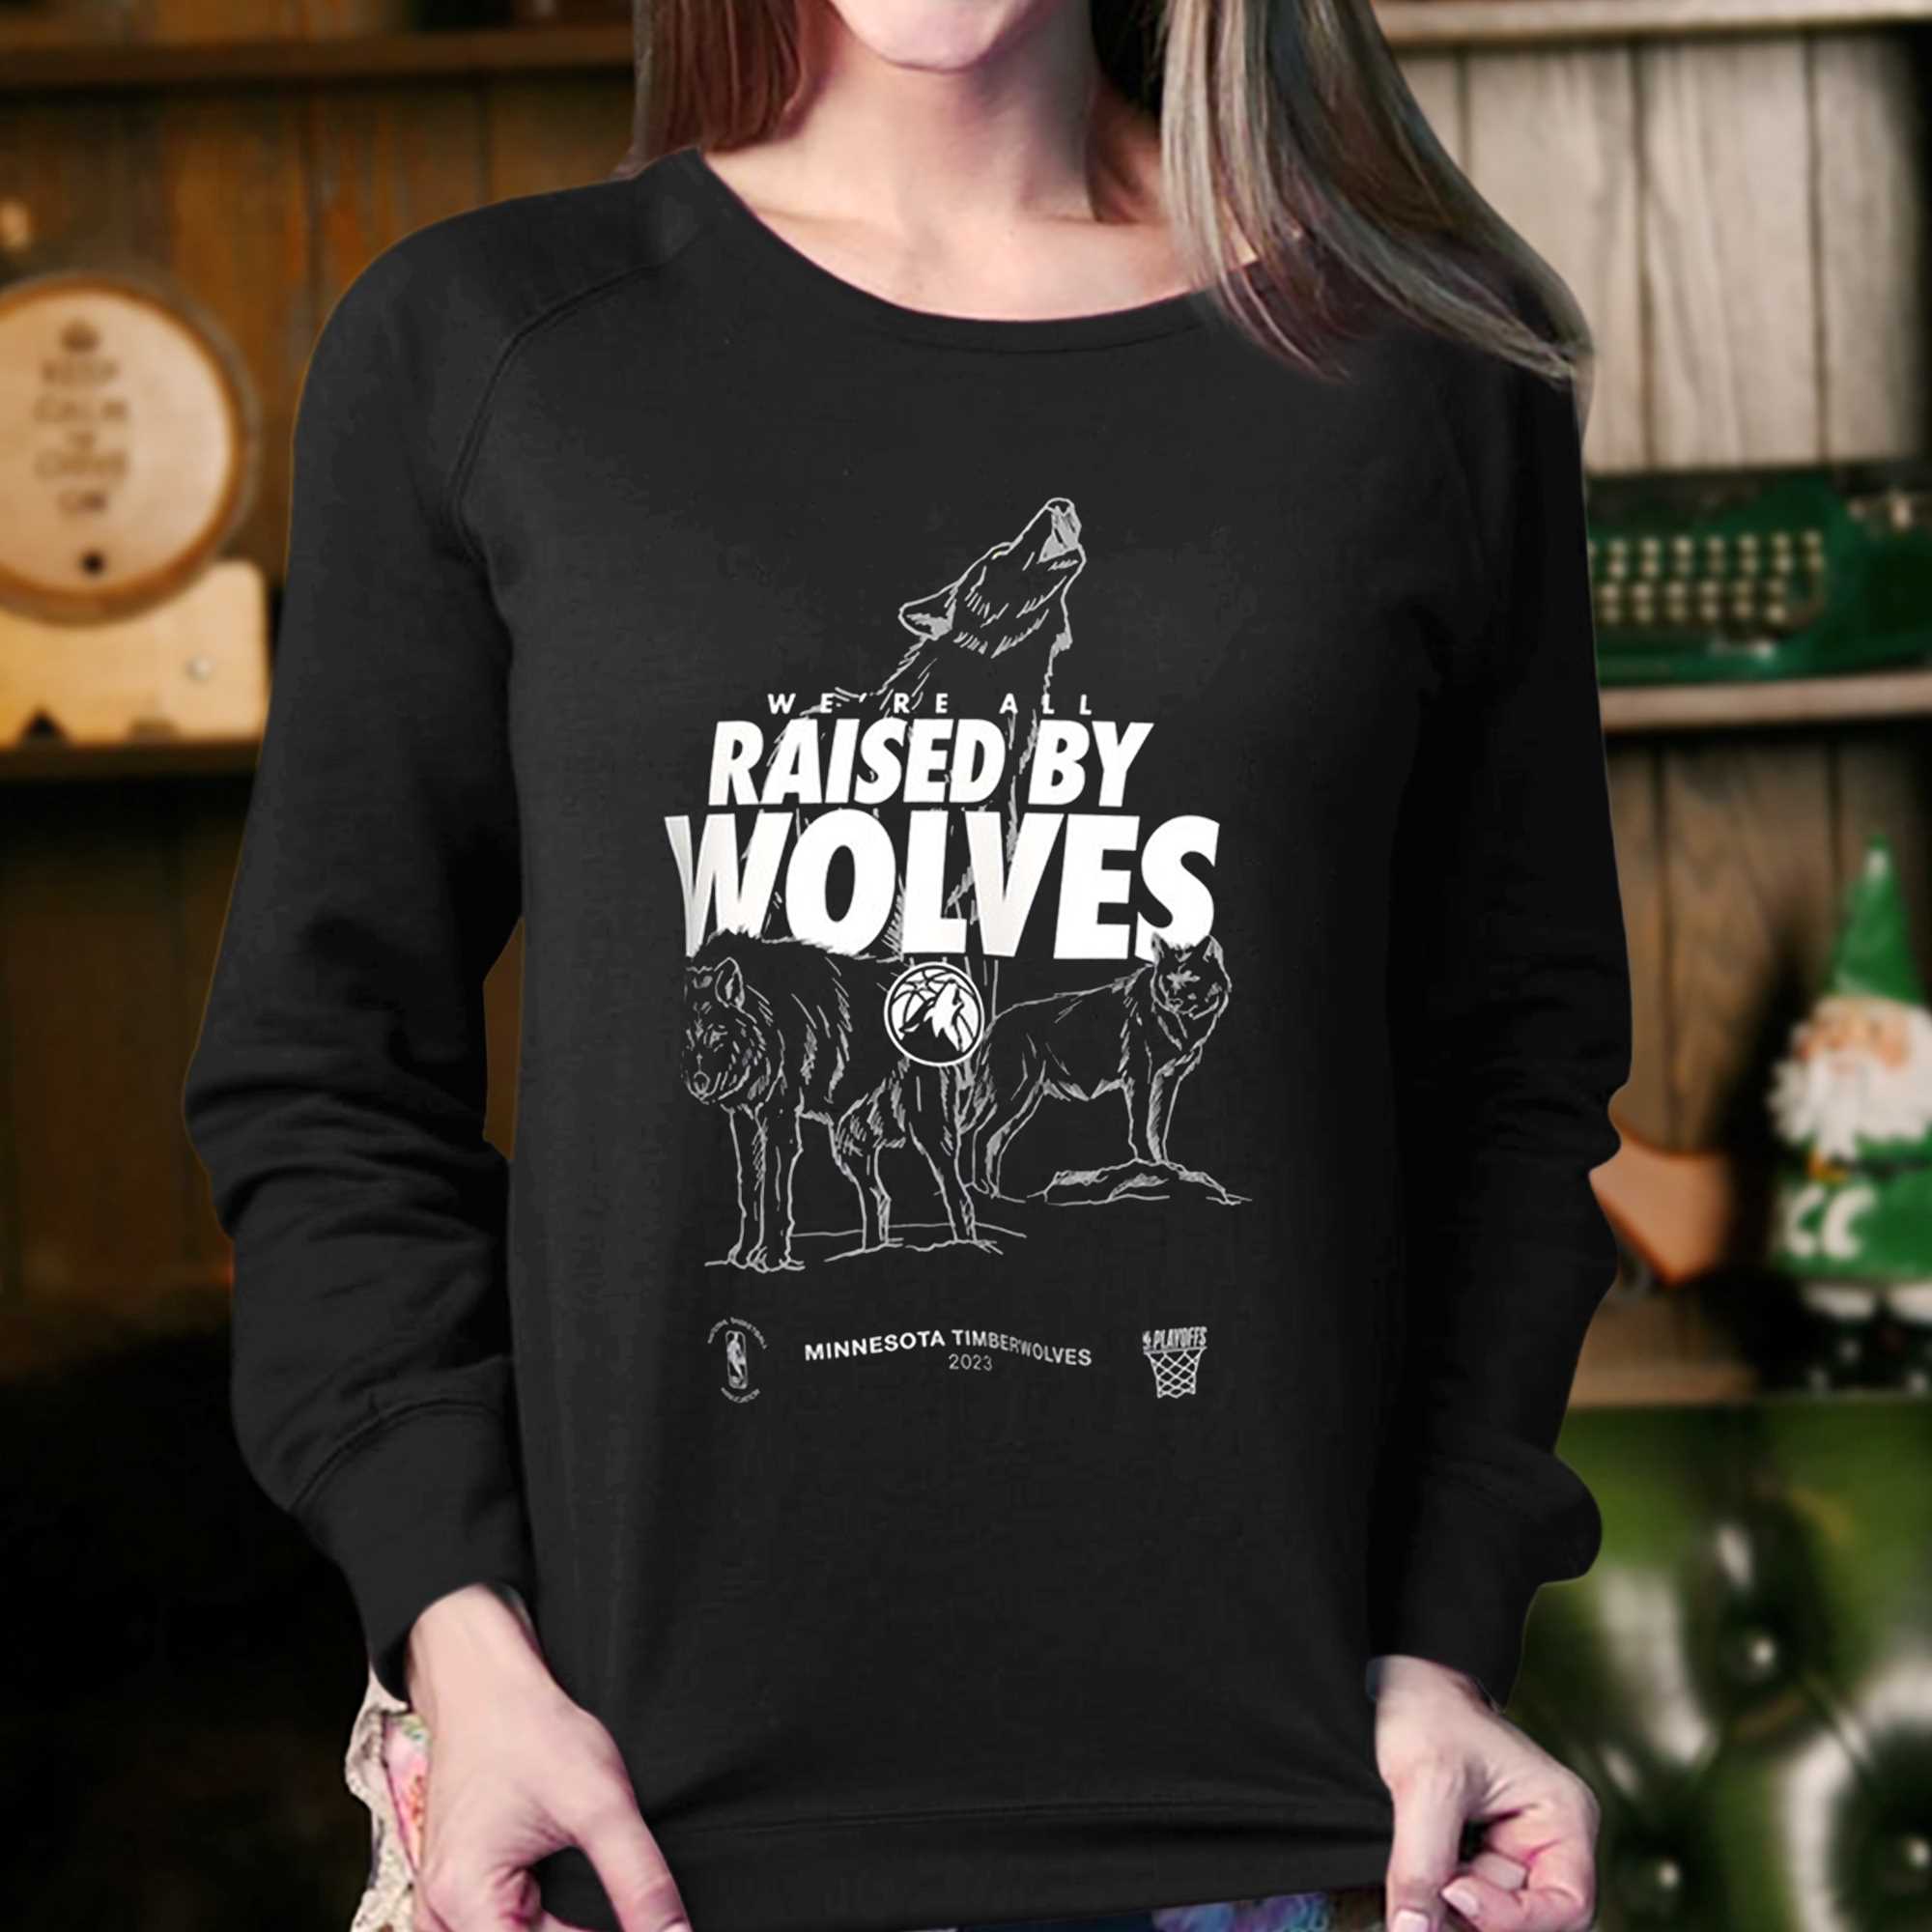 minnesota timberwolves t shirt